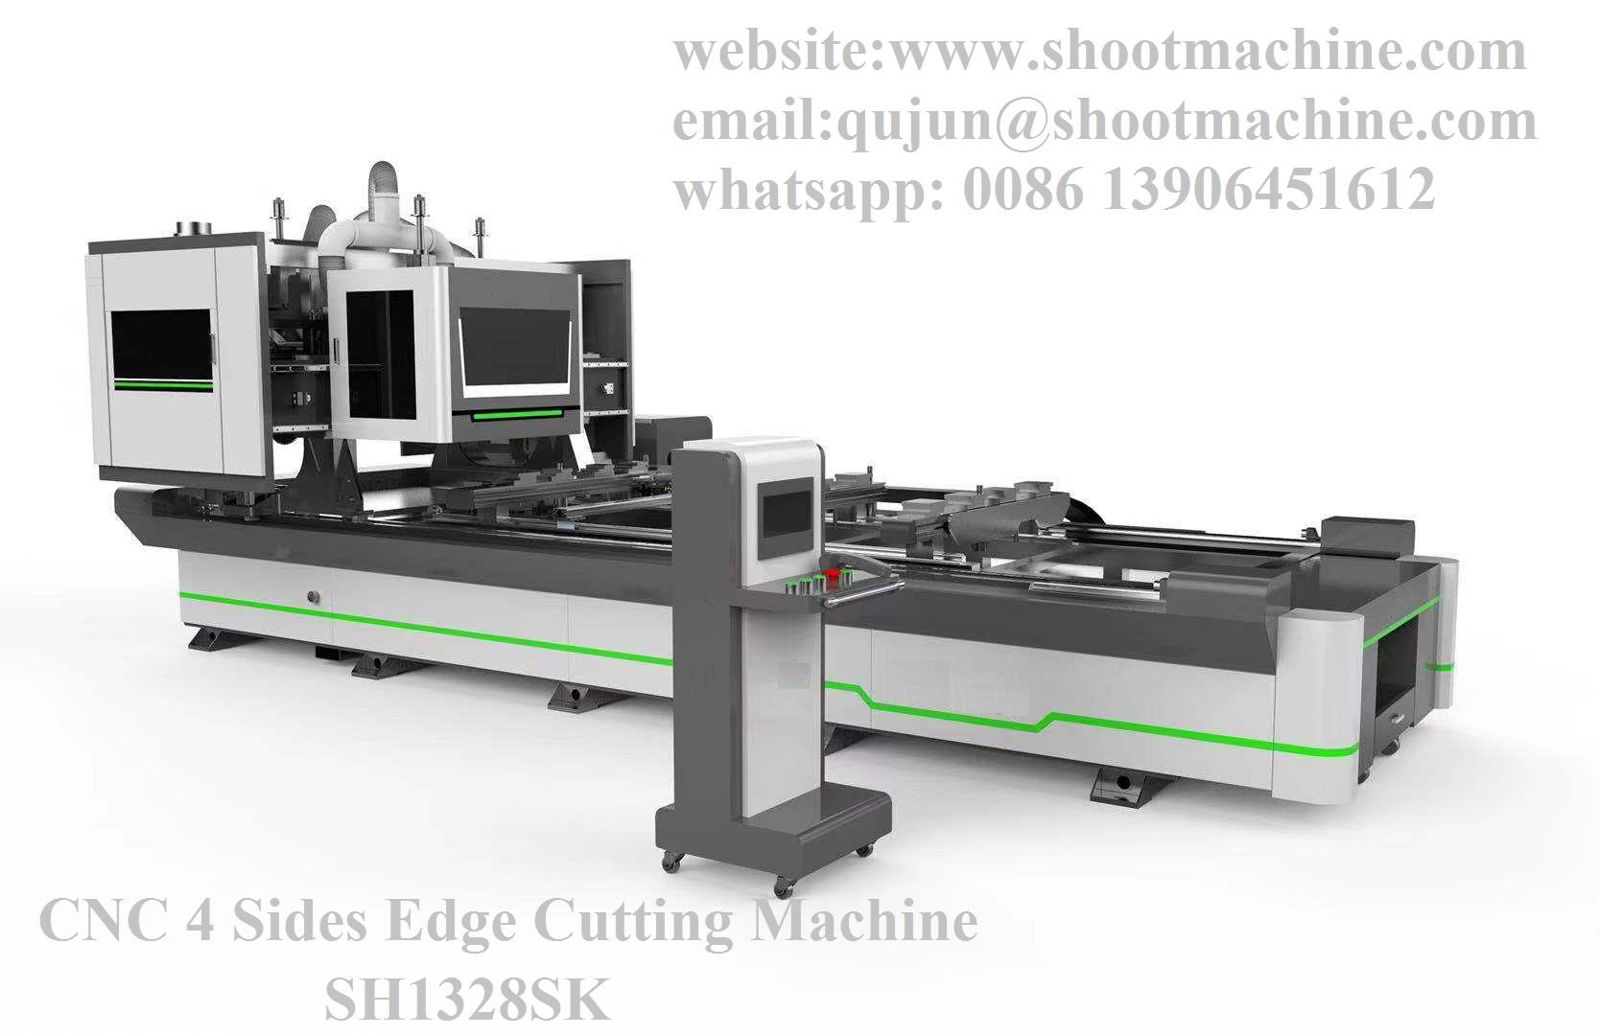 Woodworking CNC 4 Sides Edge Cutting Machine, SH1328SK